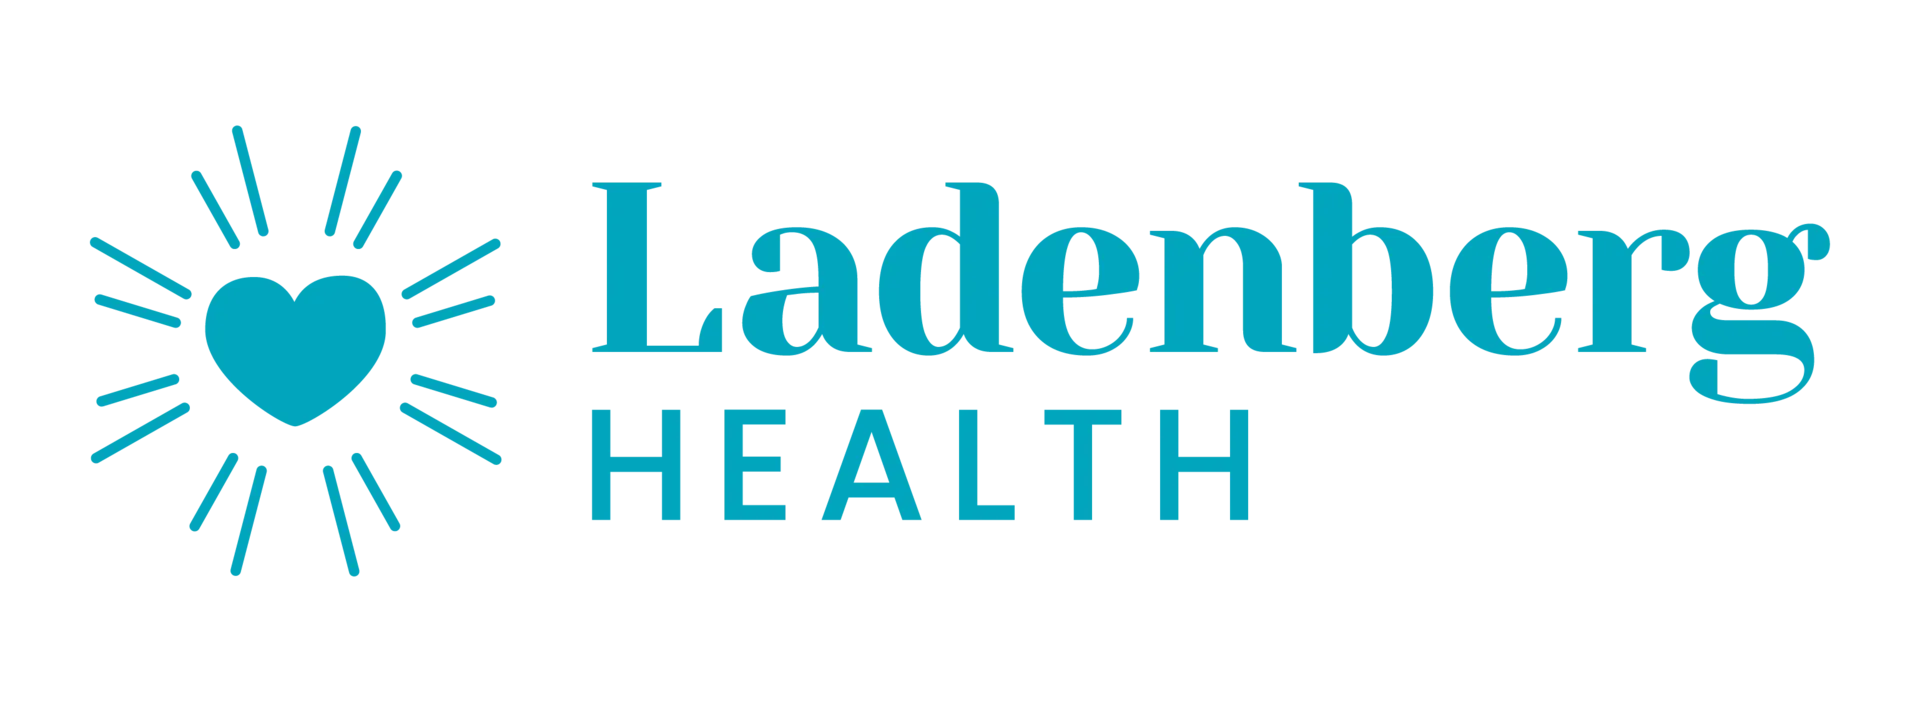 Ladenberg Health - Webbsida